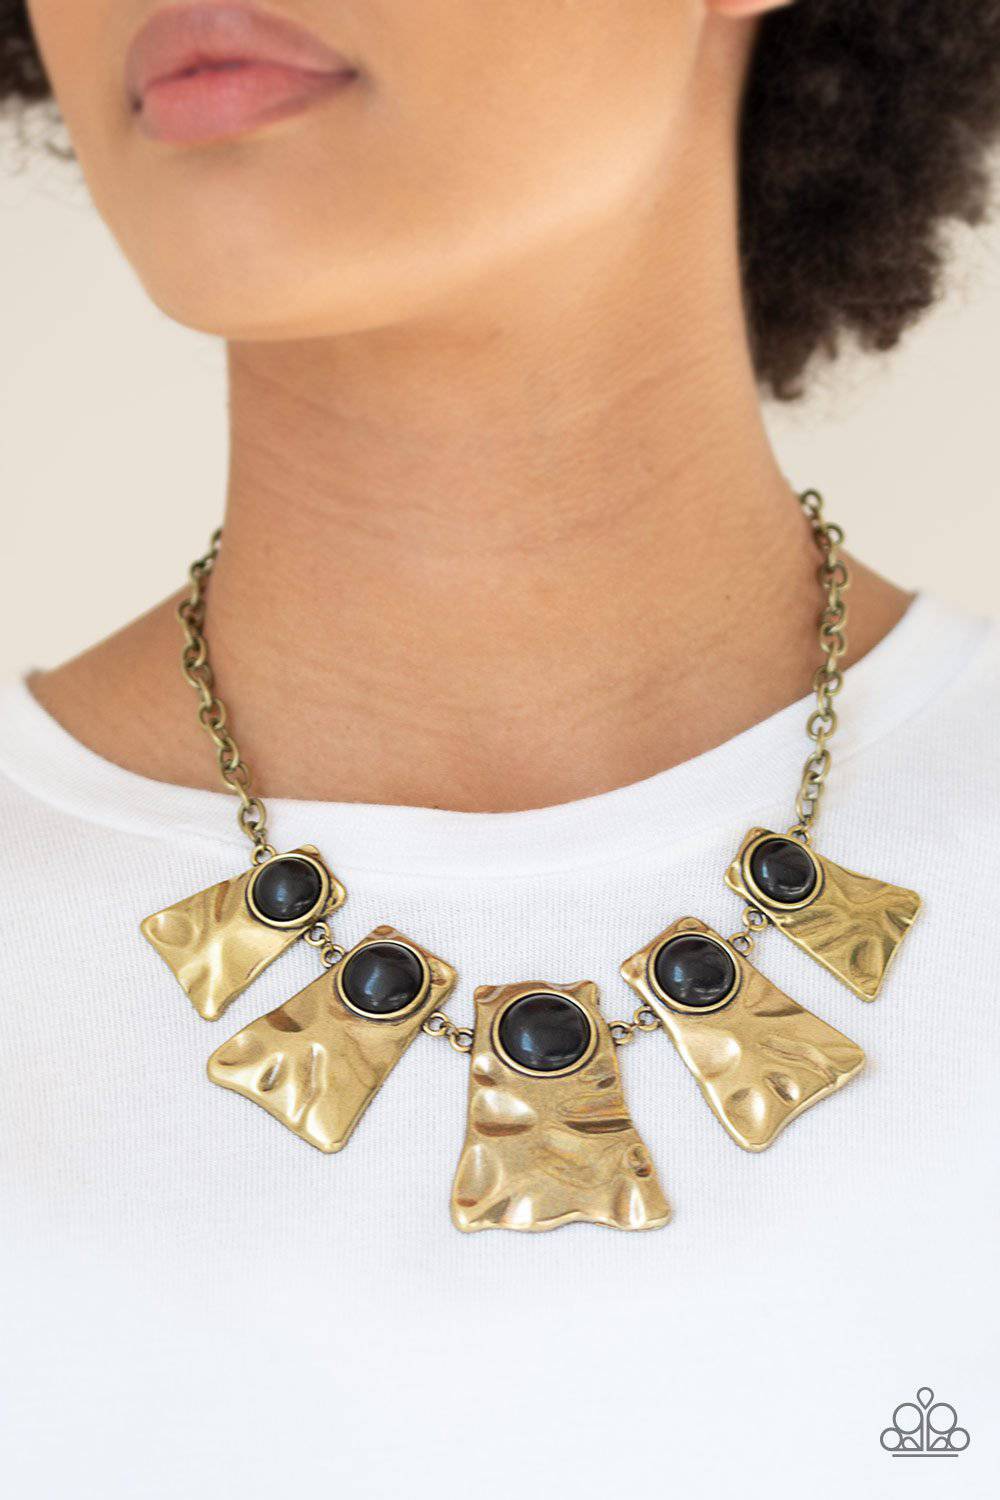 Cougar - Brass & Black Necklace - Paparazzi Accessories - GlaMarous Titi Jewels